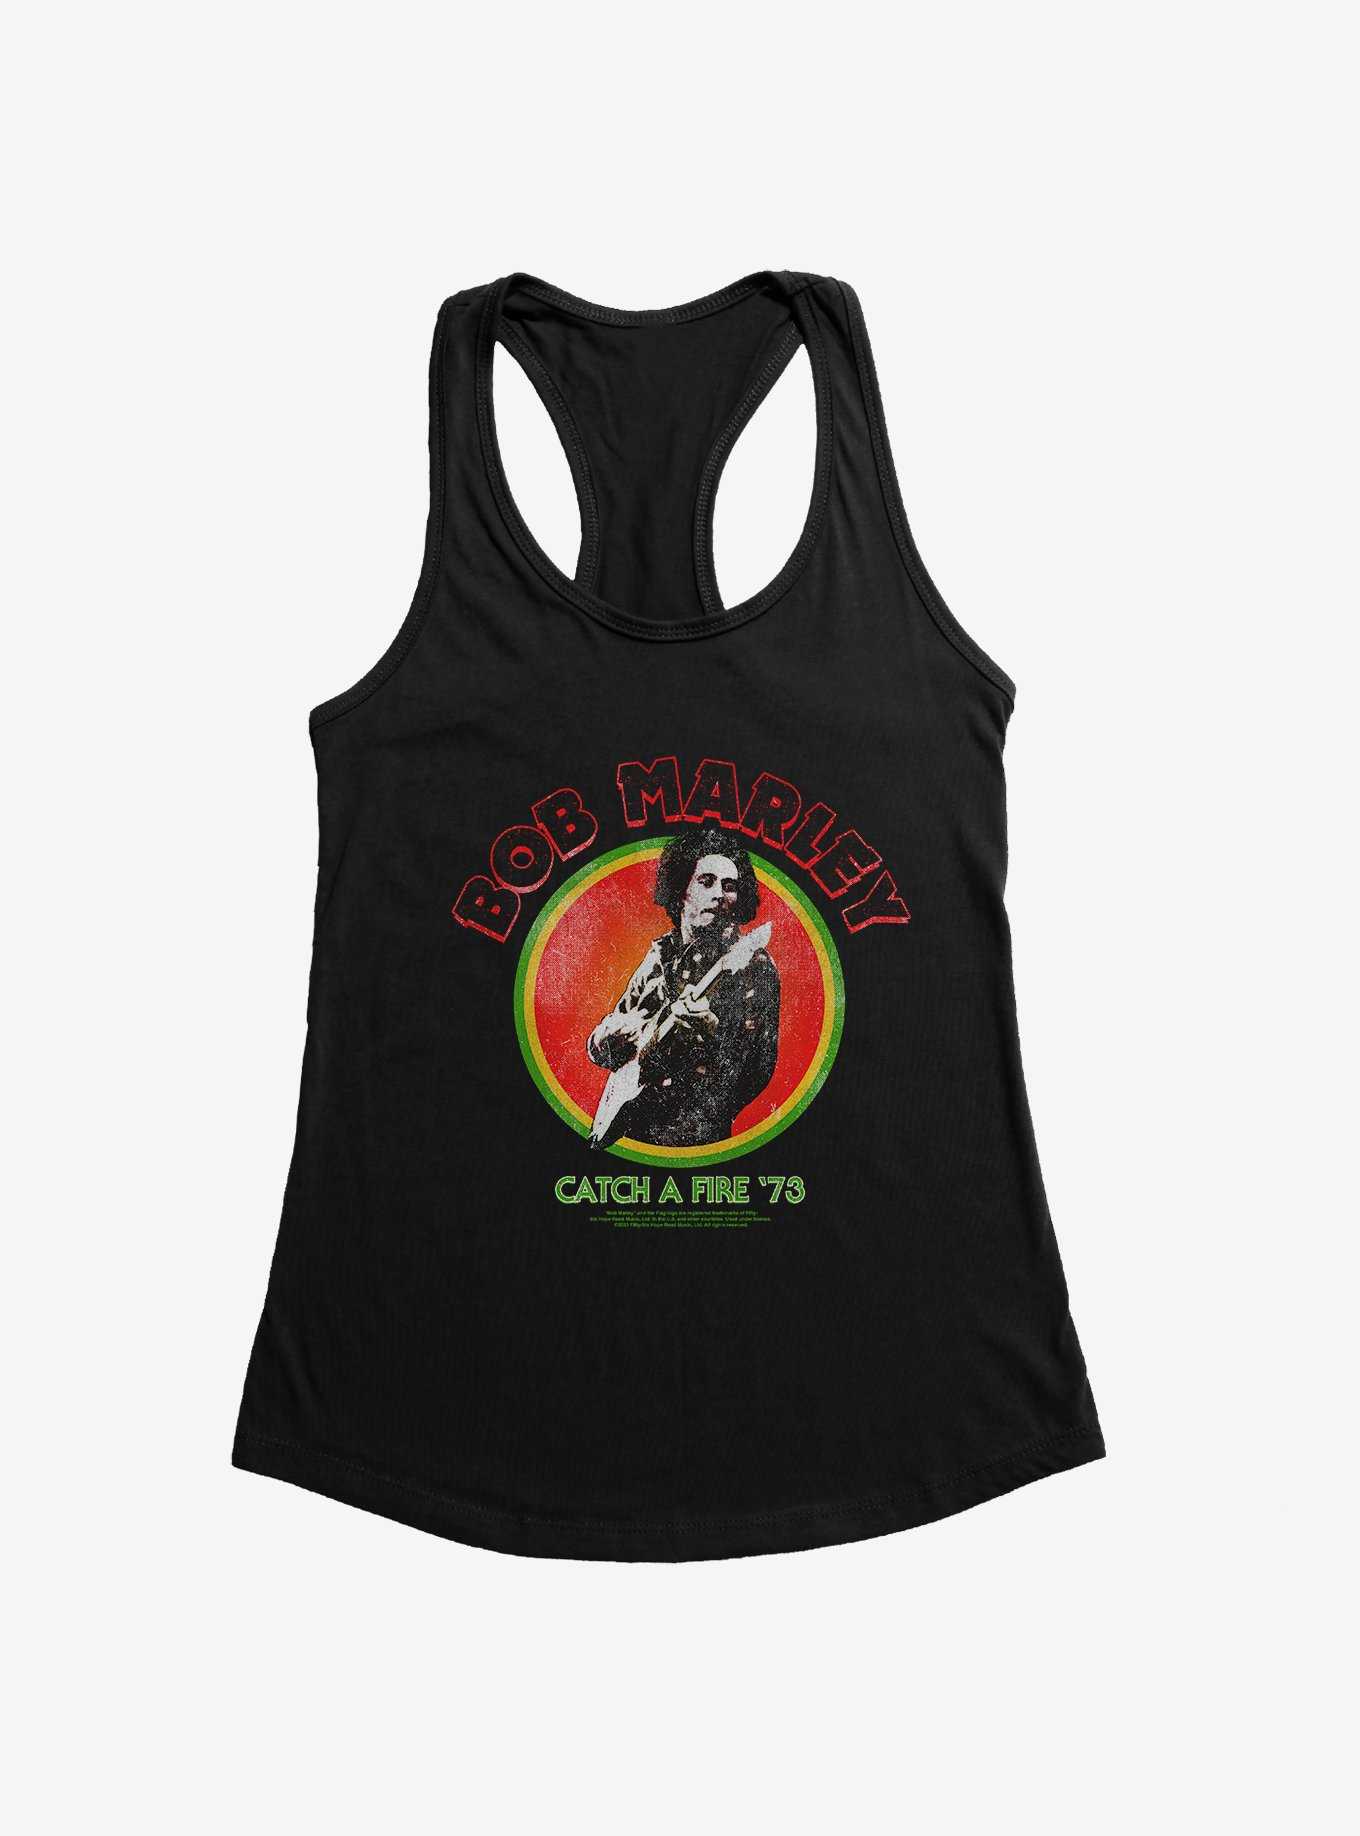 Bob Marley Catch A Fire '73 Girls Tank, , hi-res